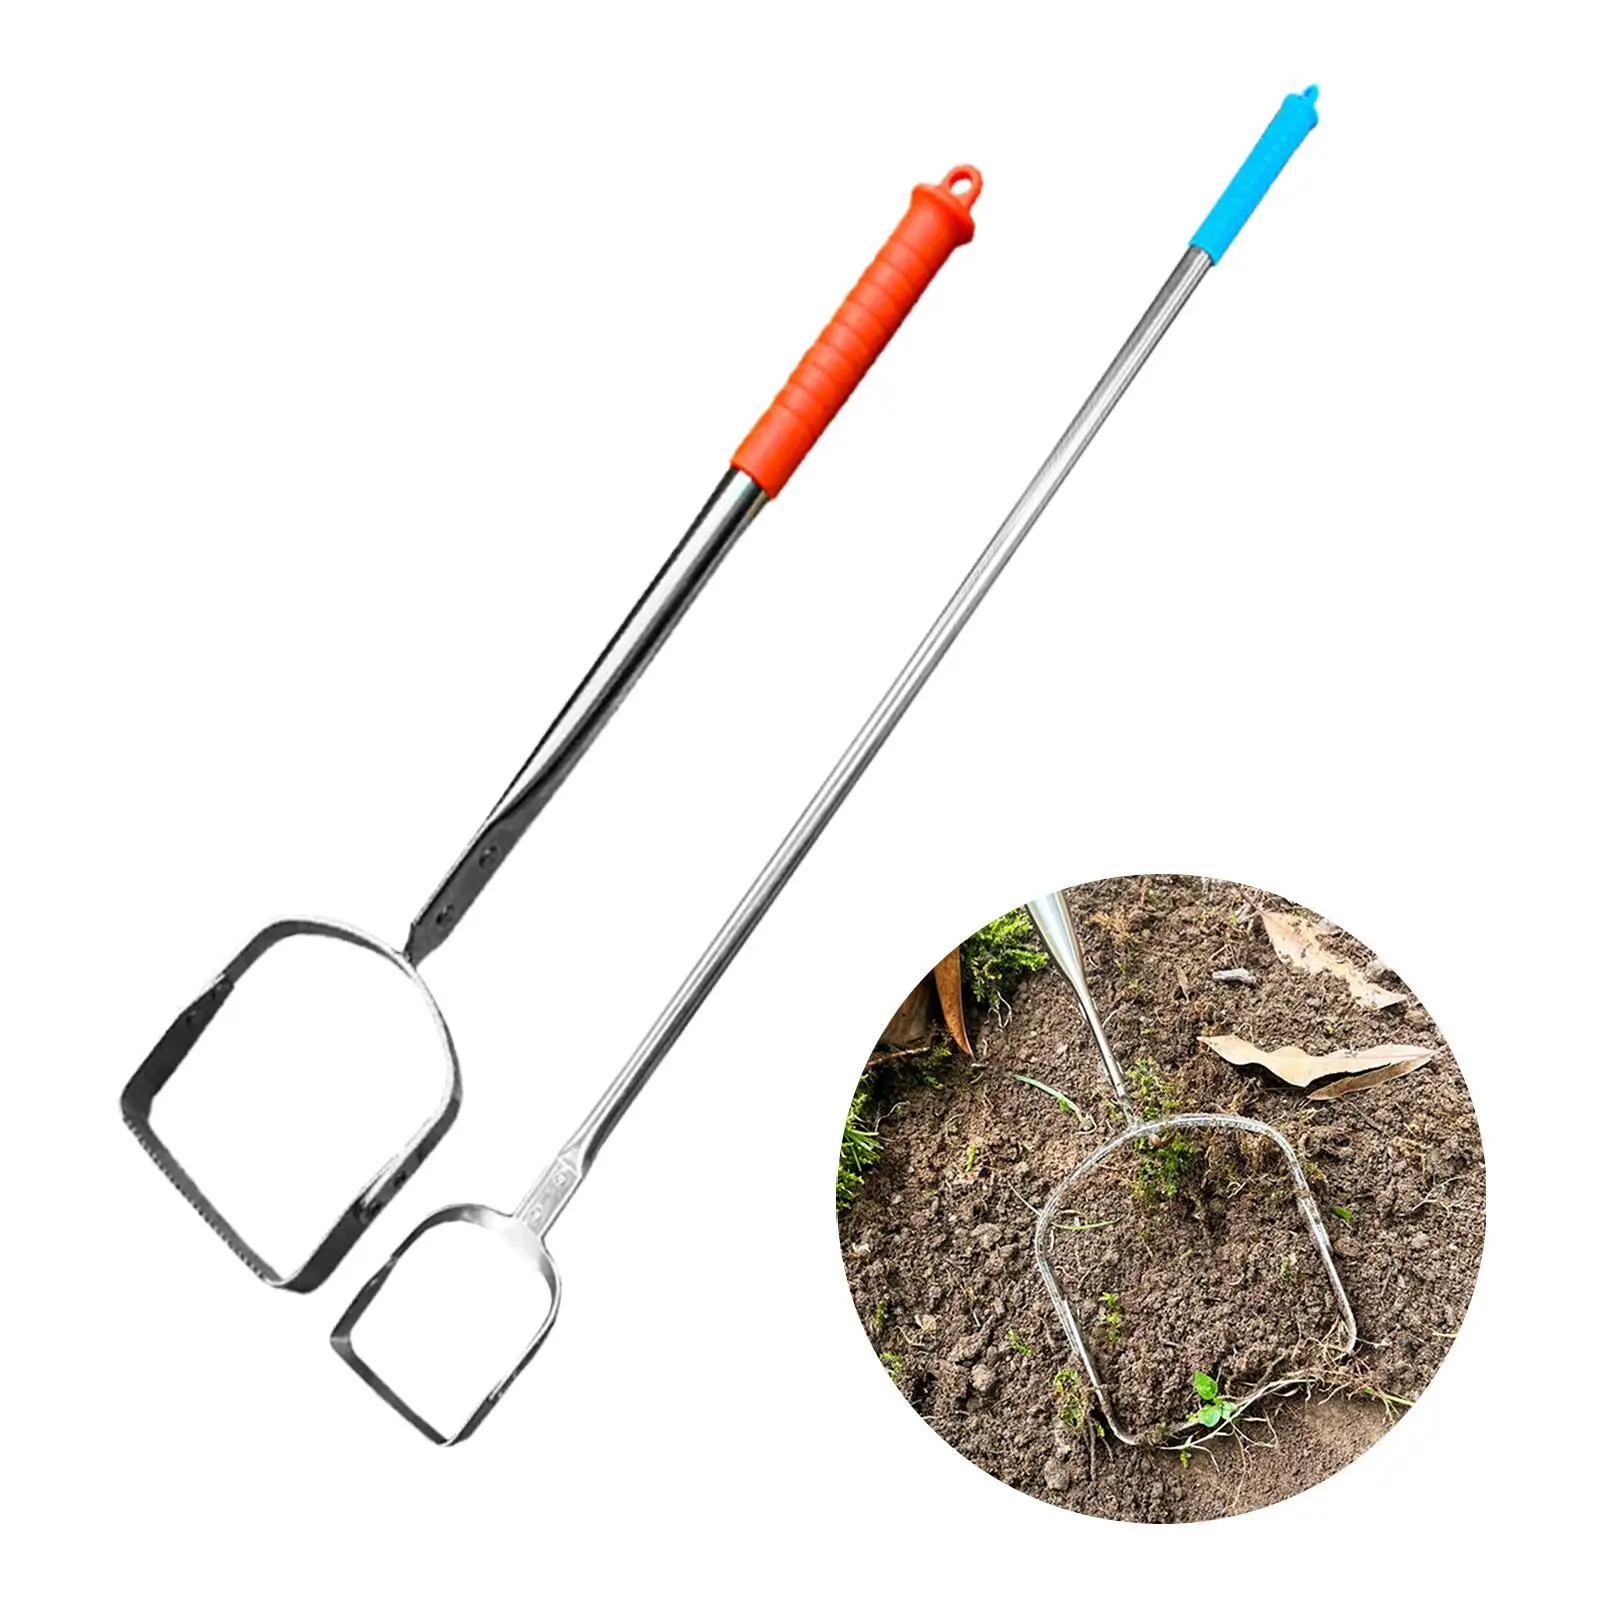 Garden Hoe Tool Long Handle Durable Weeder Cultivator Weeding Rake for Loosening Soil Gardening Vegetables Planting Farm